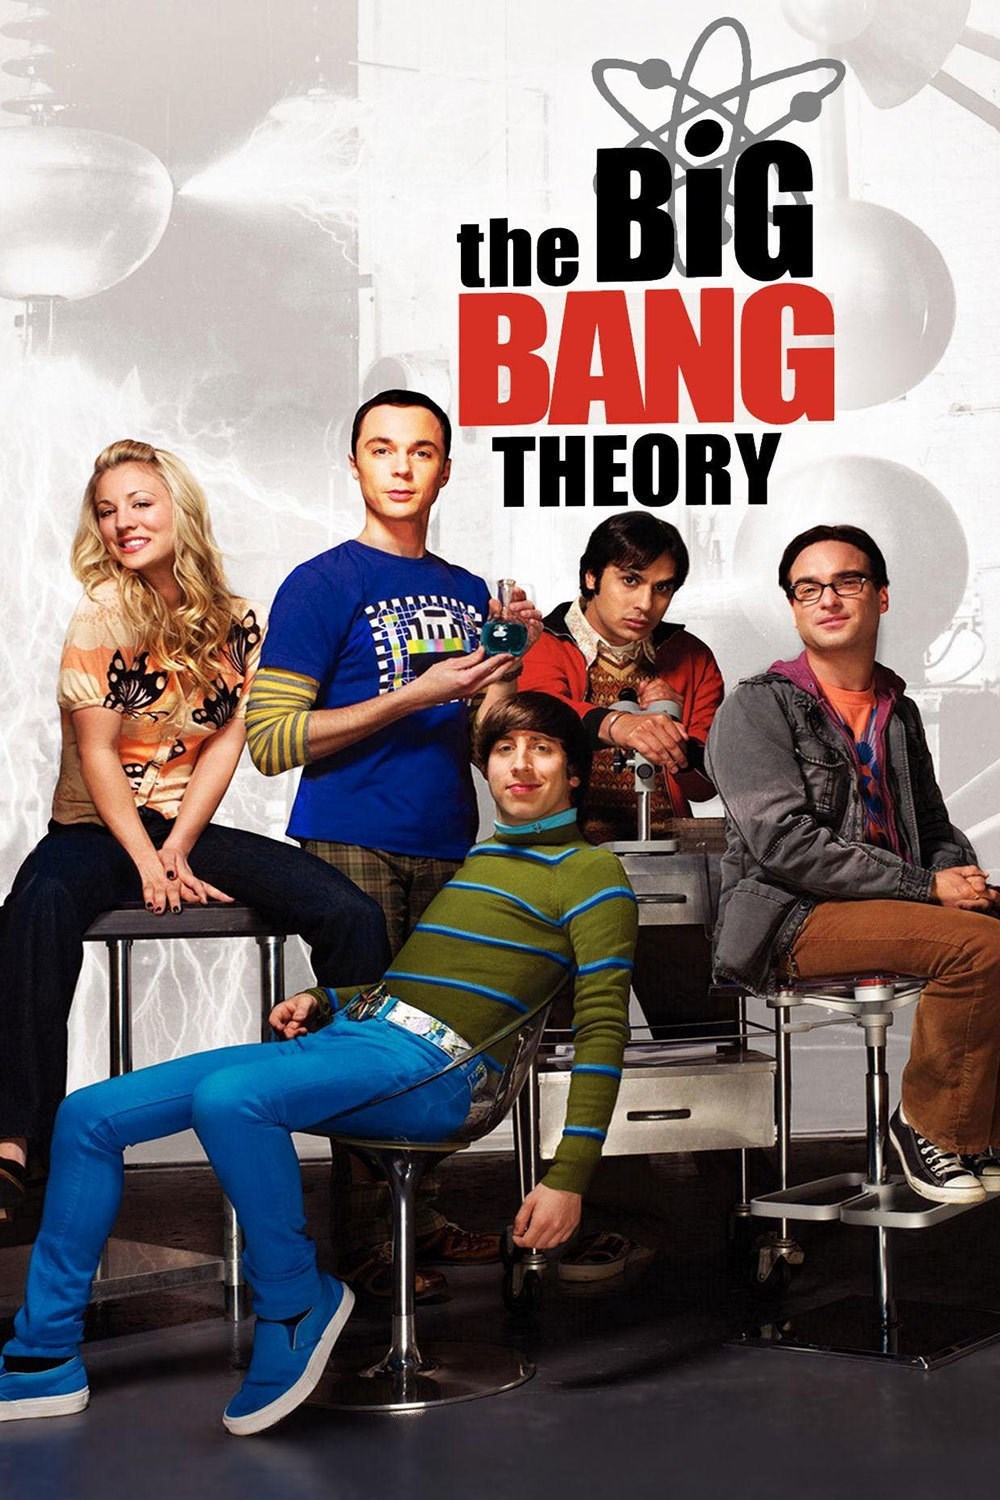 Big bang theory season 8 episode 23 watch online free The Big Bang Theory Season 3 Watch Online Free On Gomovies